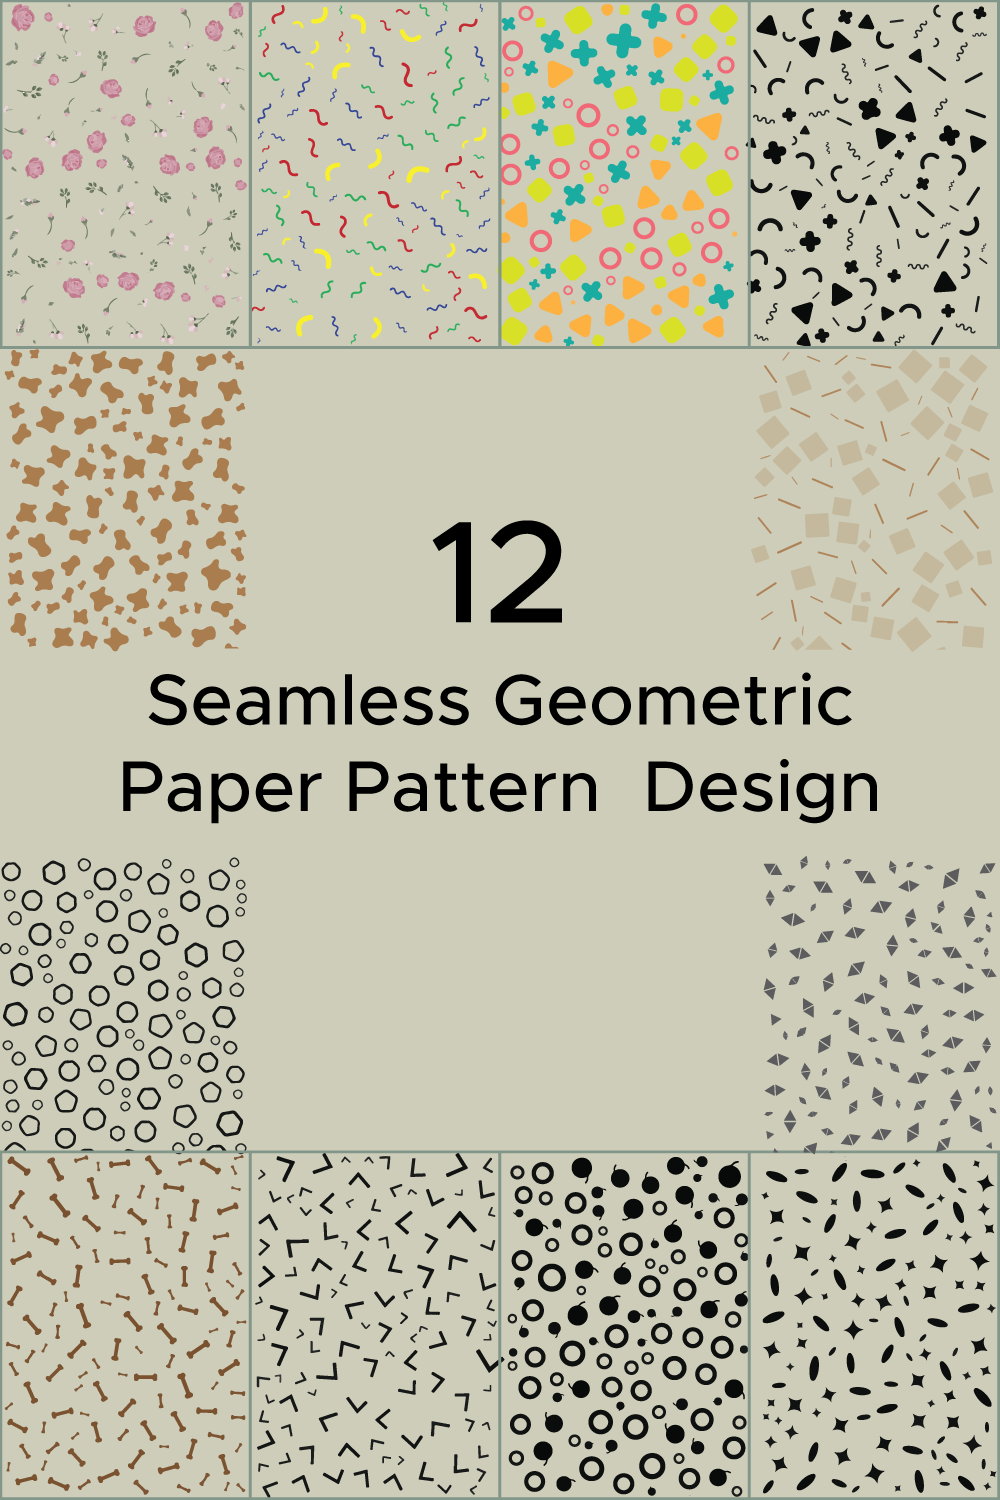 Geometric Seamleass Paper Pattern Design pinterest image.